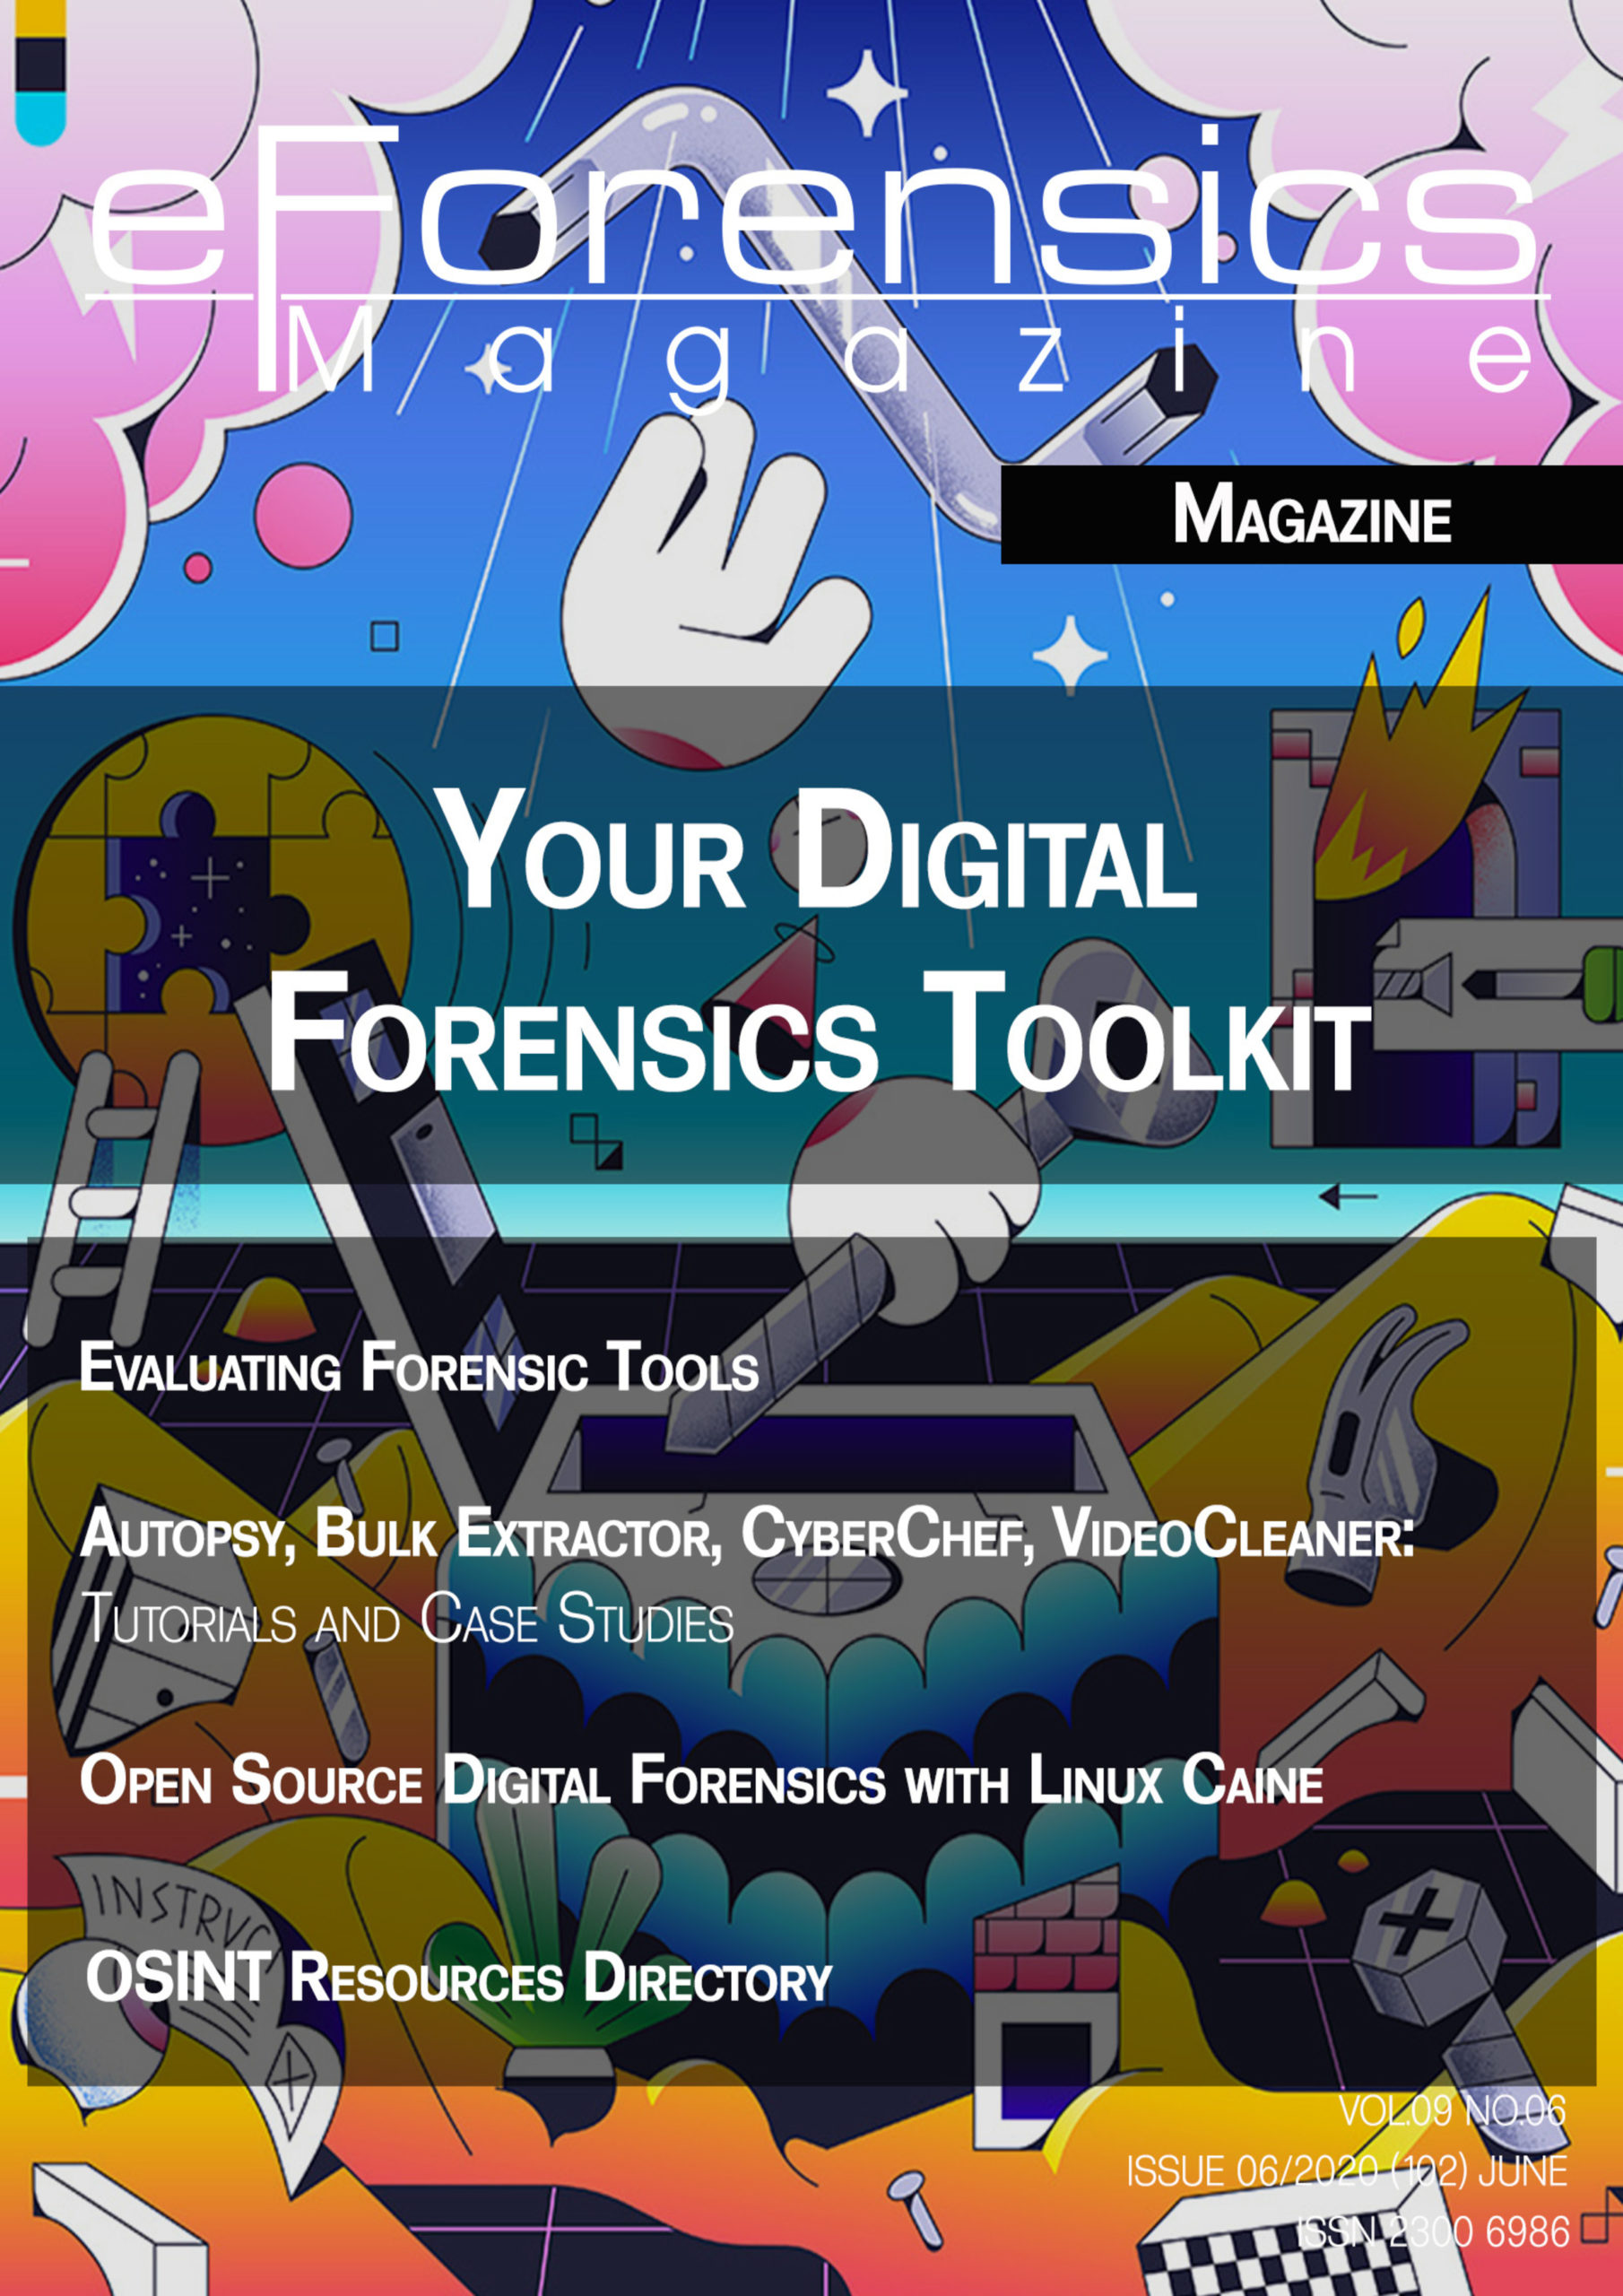 Your Digital Forensics Toolkit Eforensics